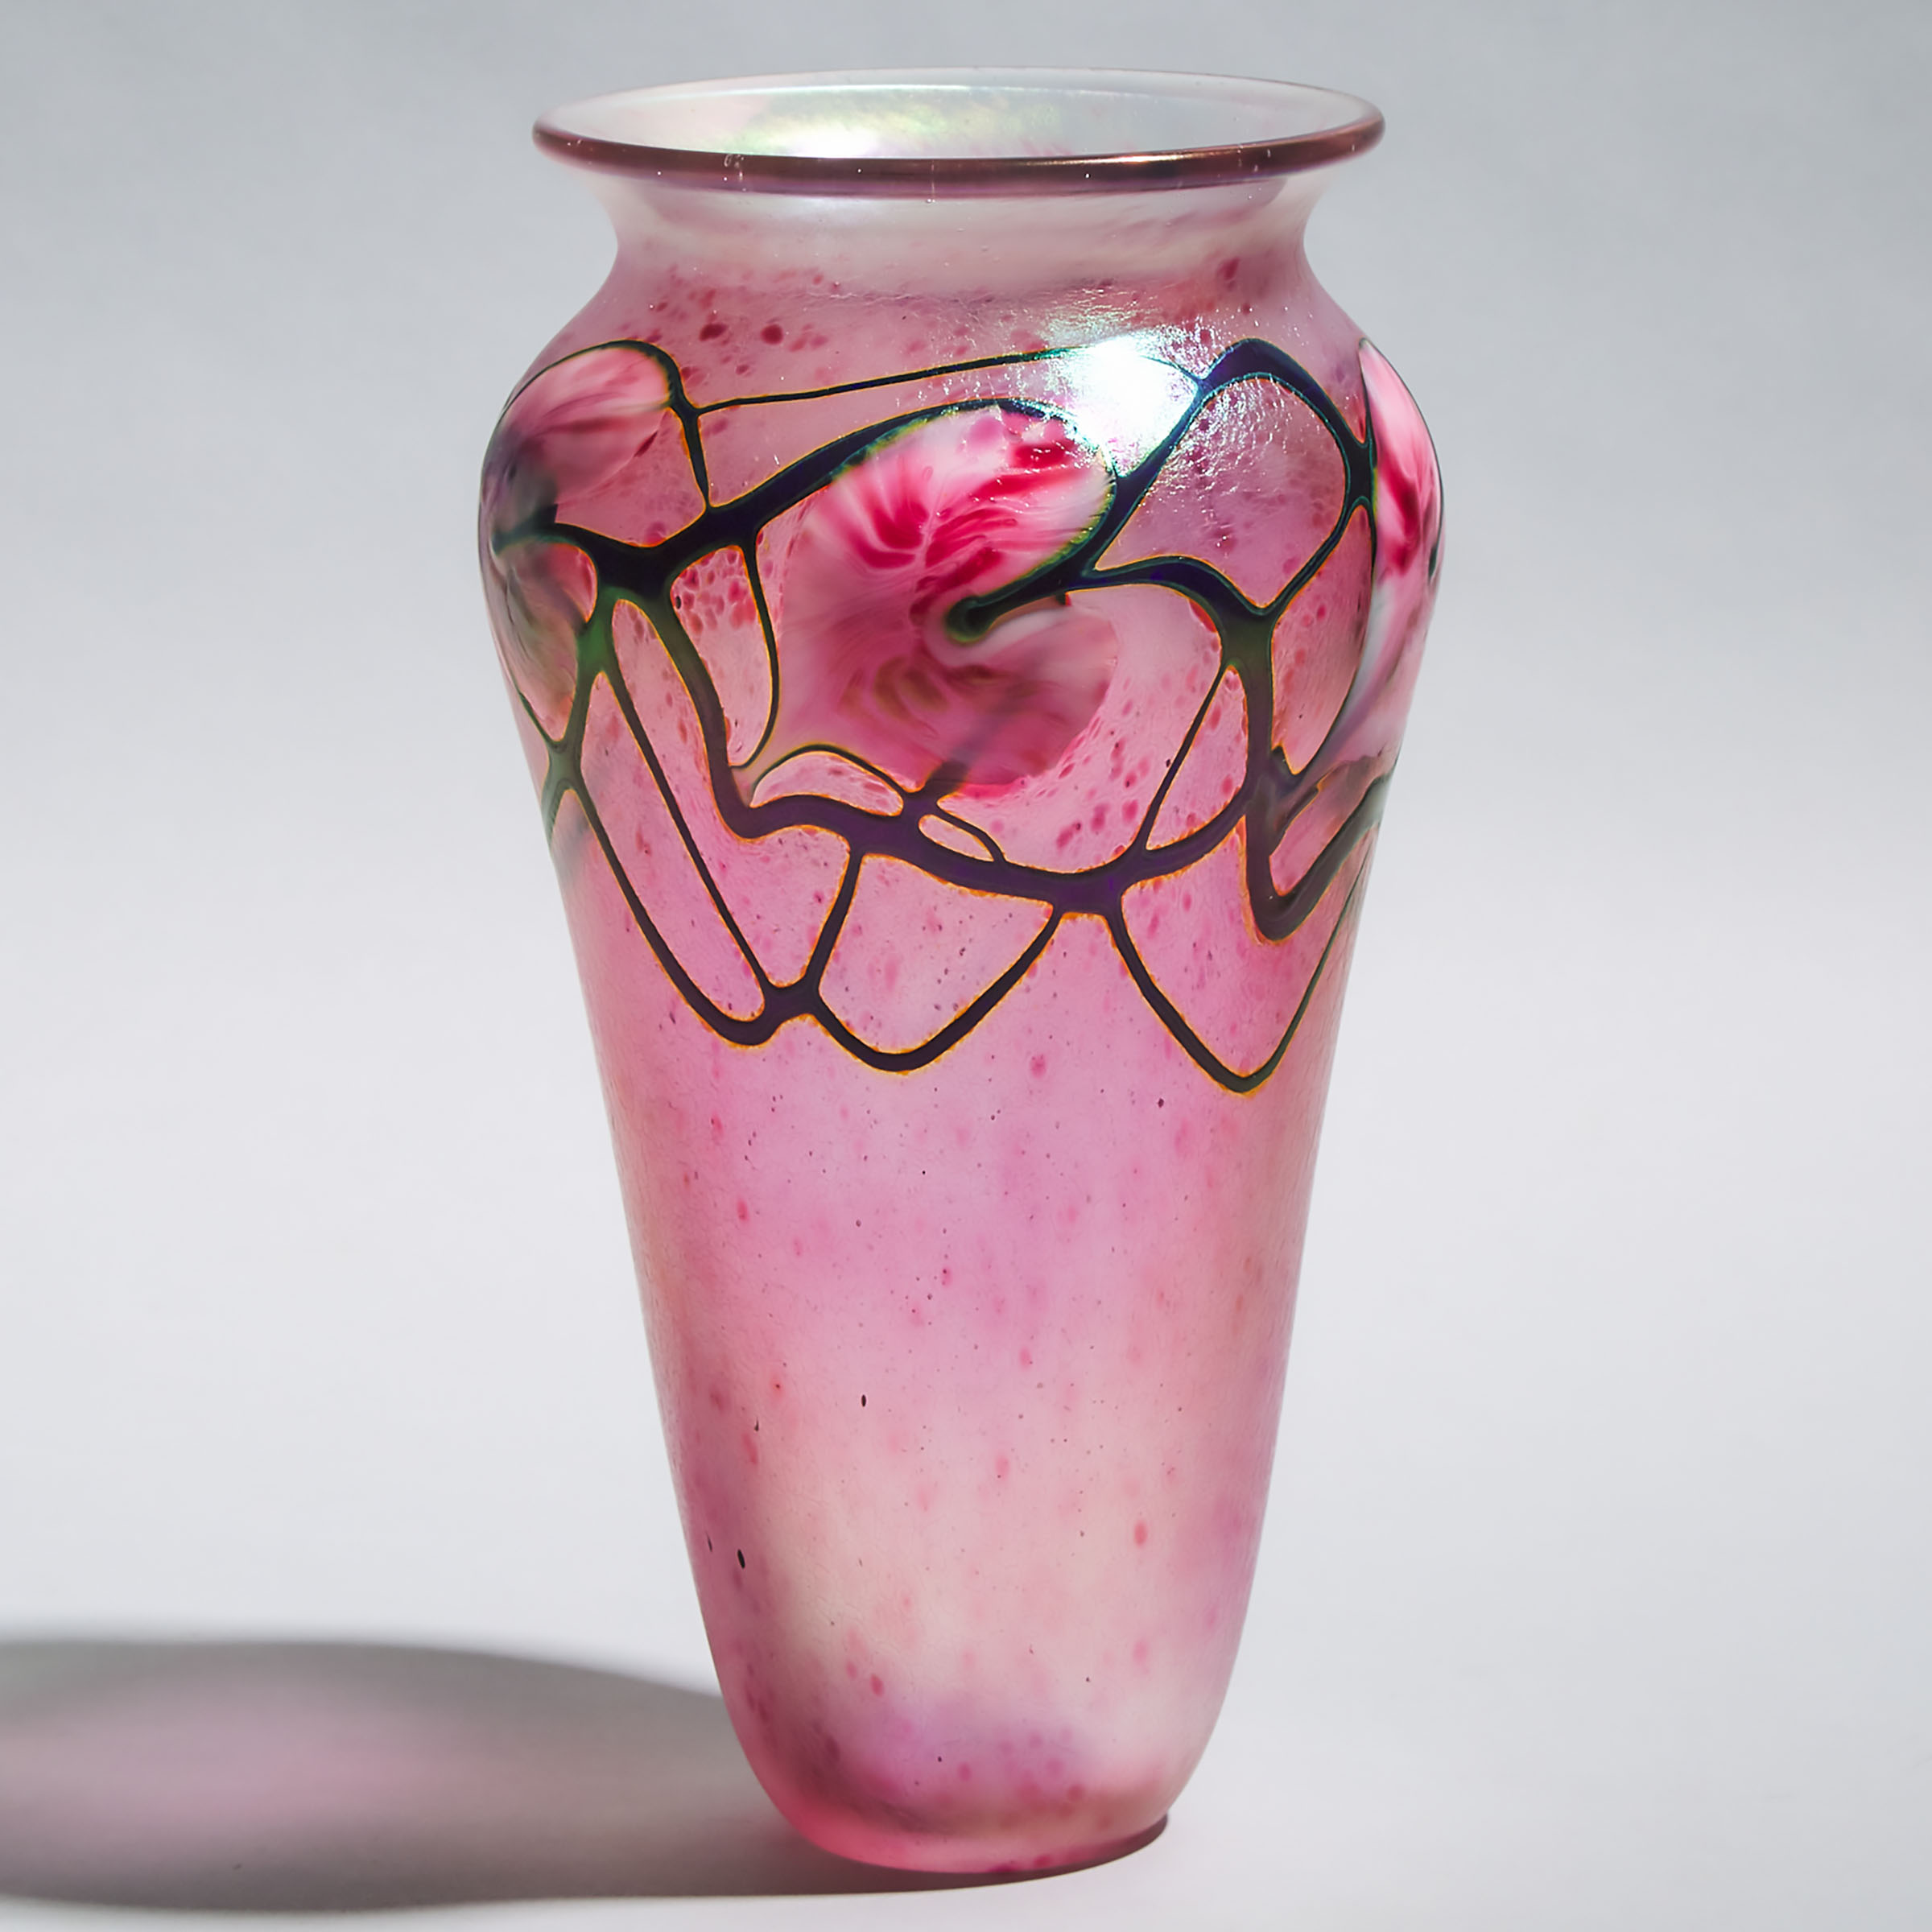 John Lotton (American, b.1964), Iridescent Pink 'Leaf and Vine' Glass Vase, dated 1990